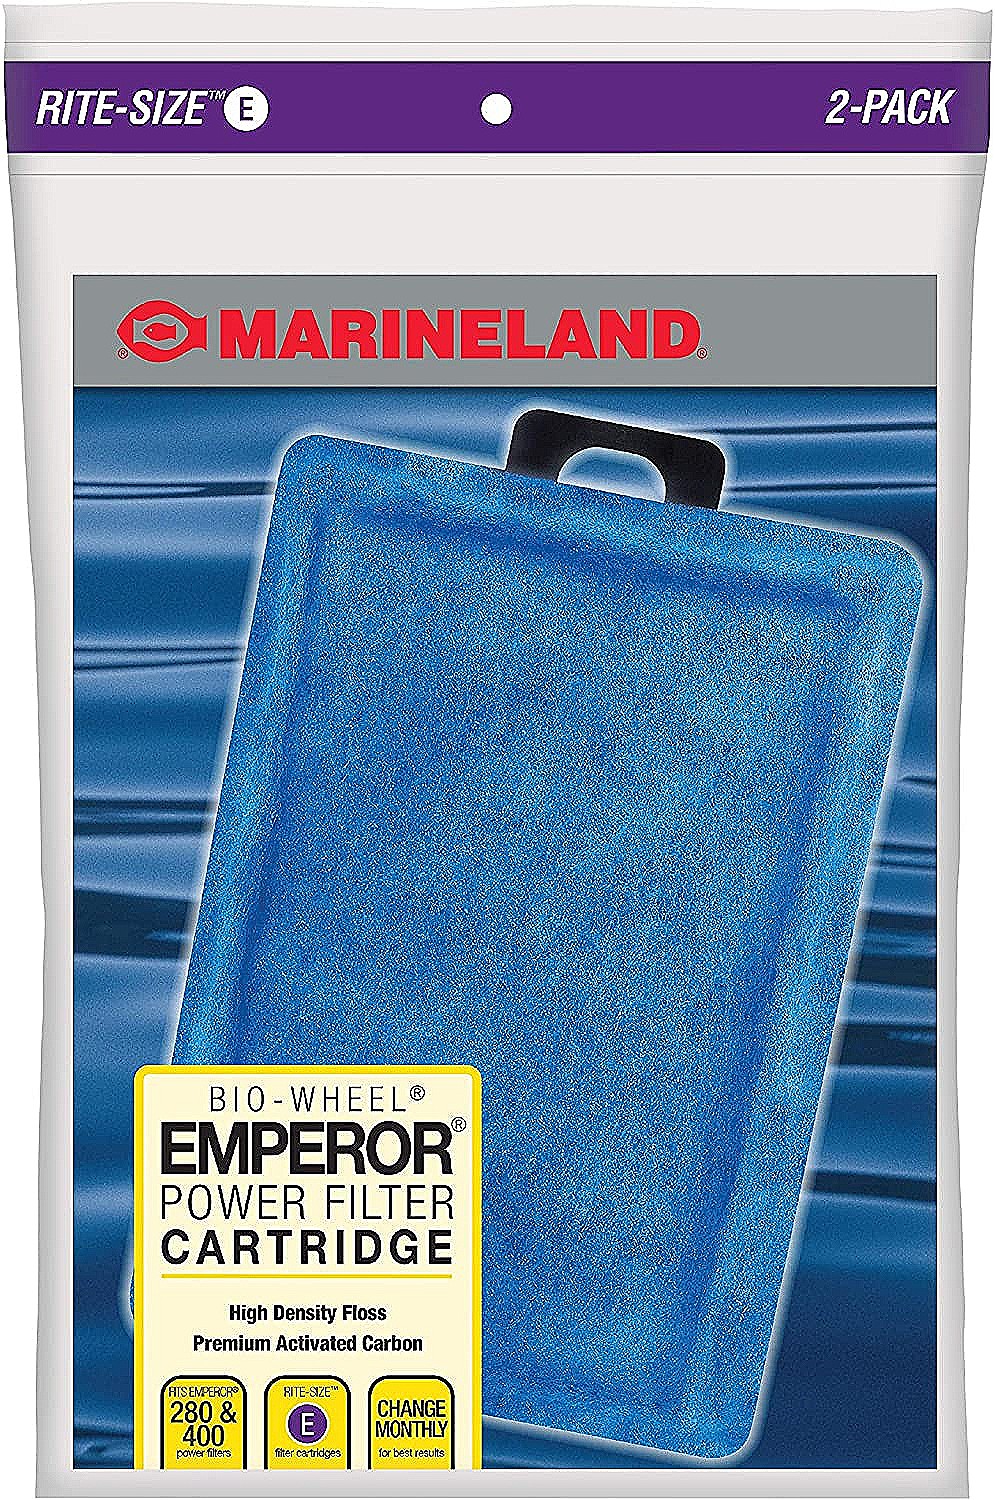 BULK BOX 12 Marineland Rite-Size E Cartridges for Emperor 280 & 400 Power Filter 